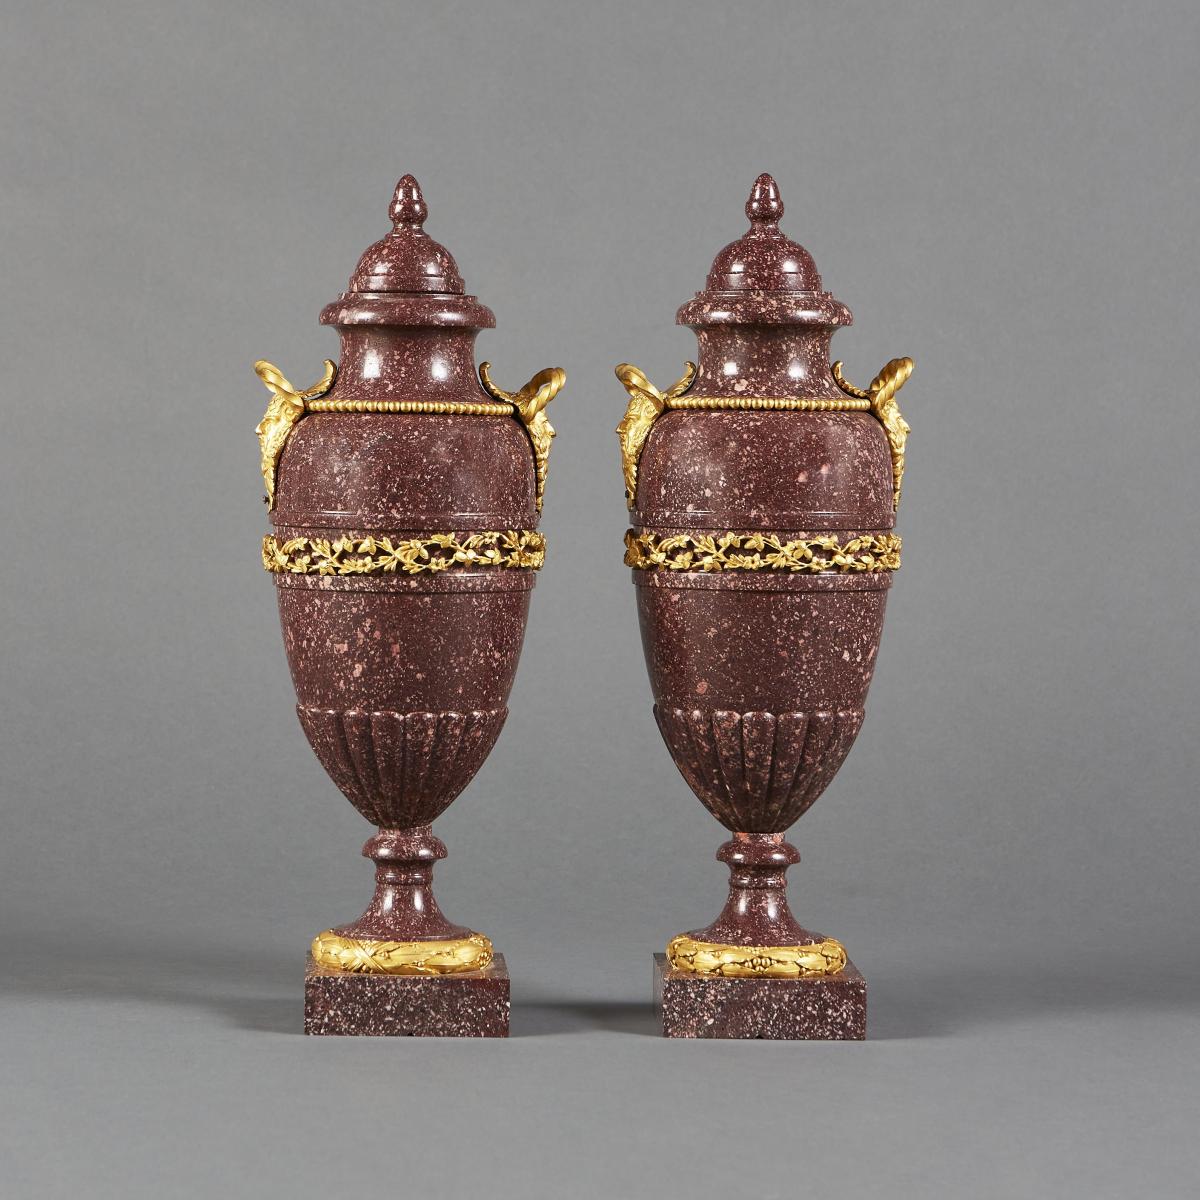 Porphyry Vases